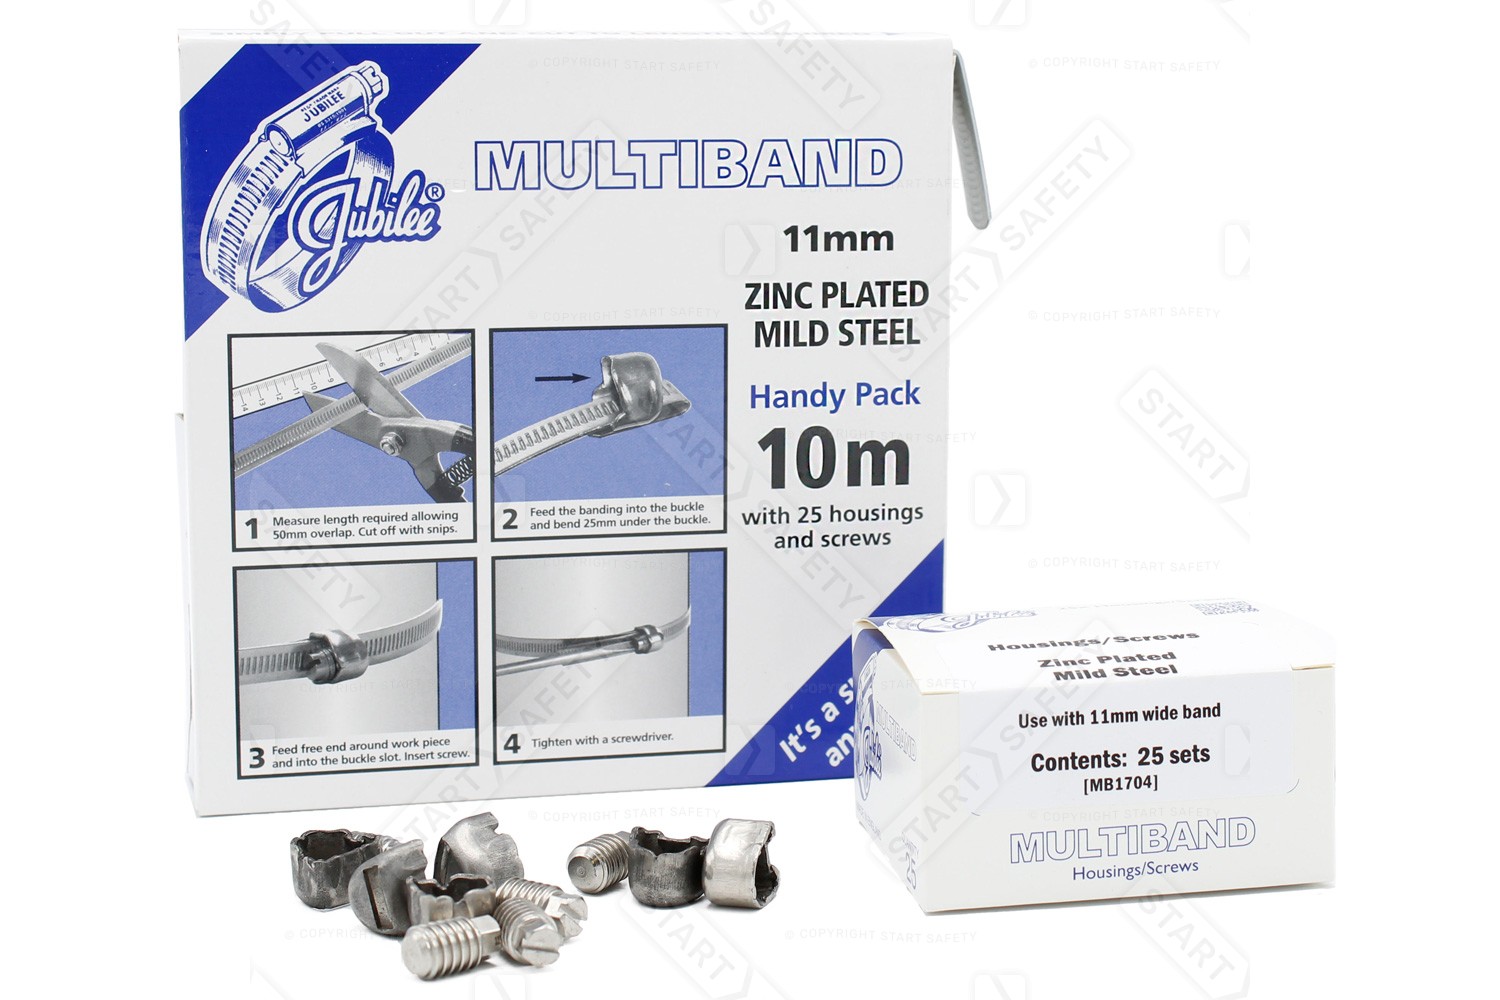 Multiband starter kit components